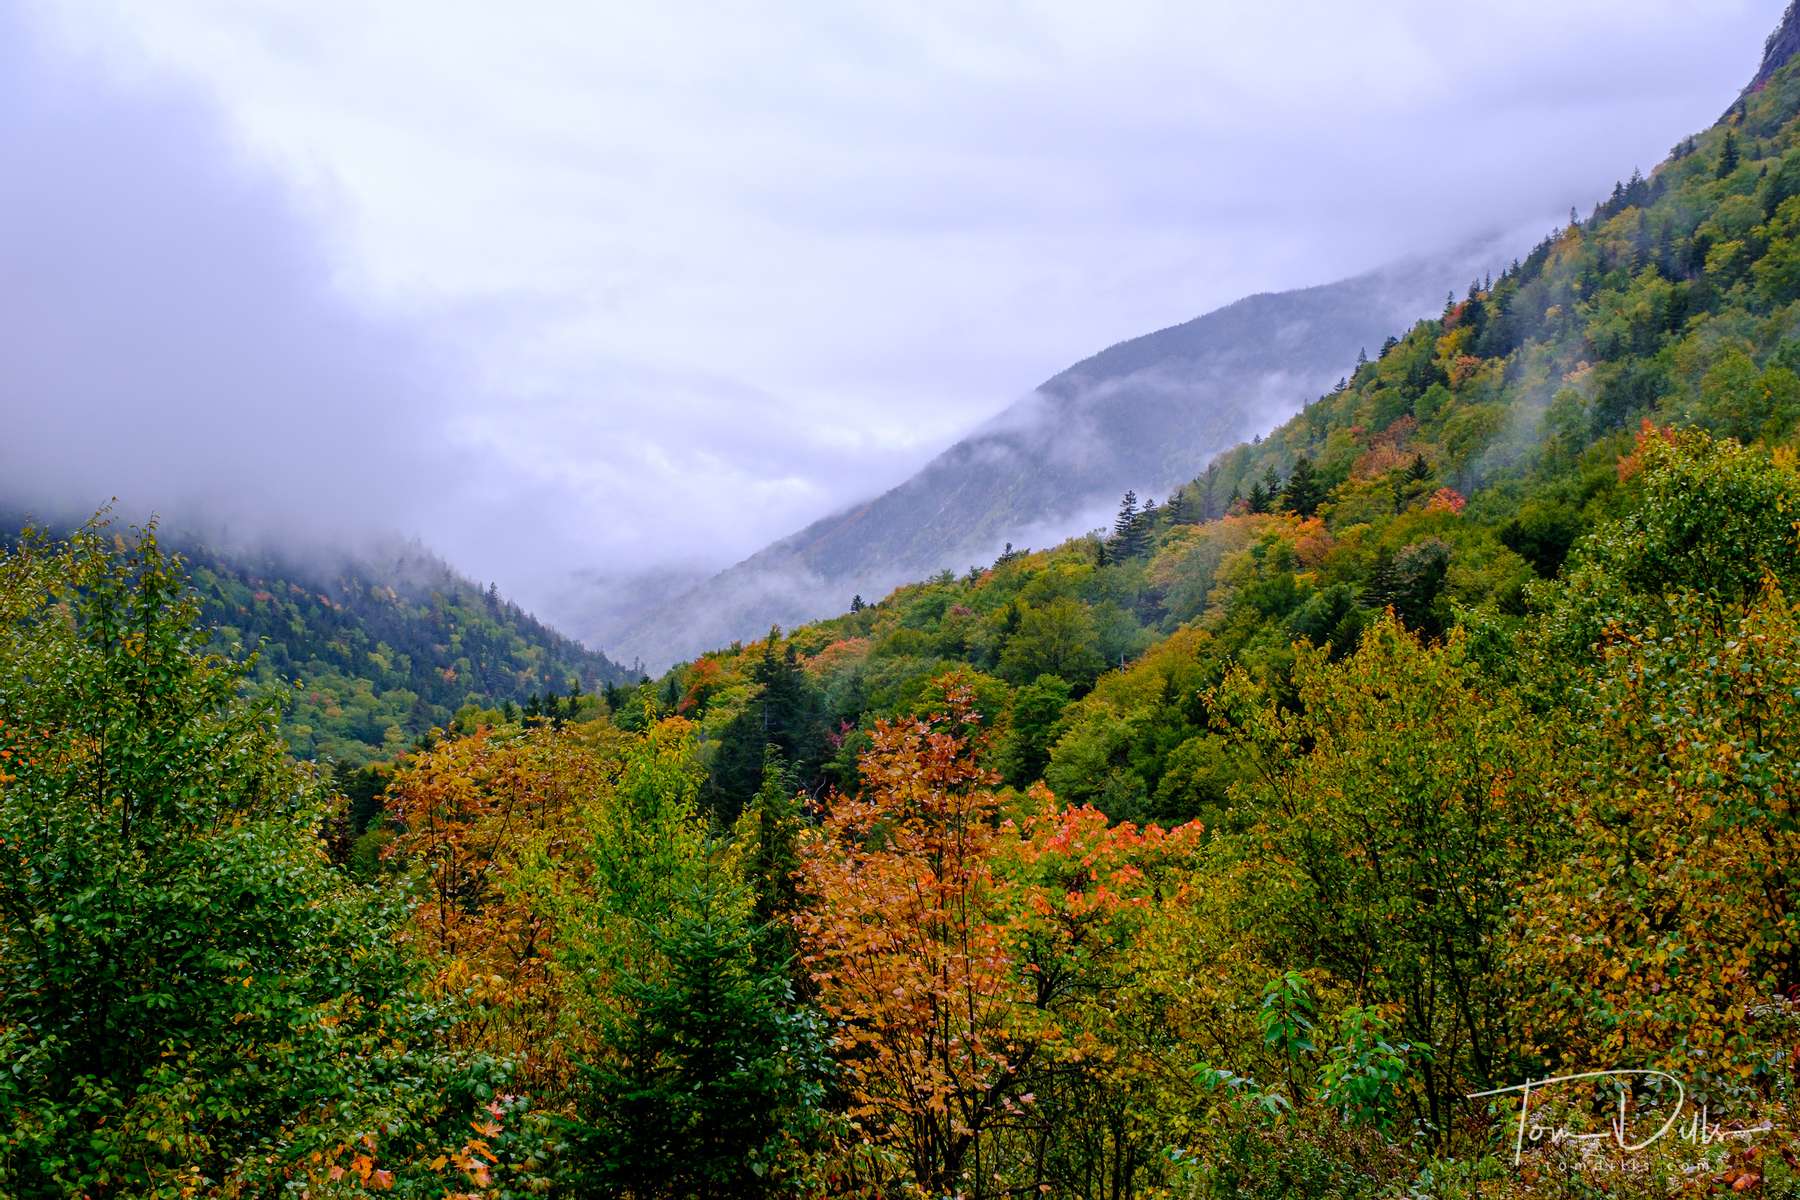 Fall foliage along US 302 near Bretton Woods, New Hampshire